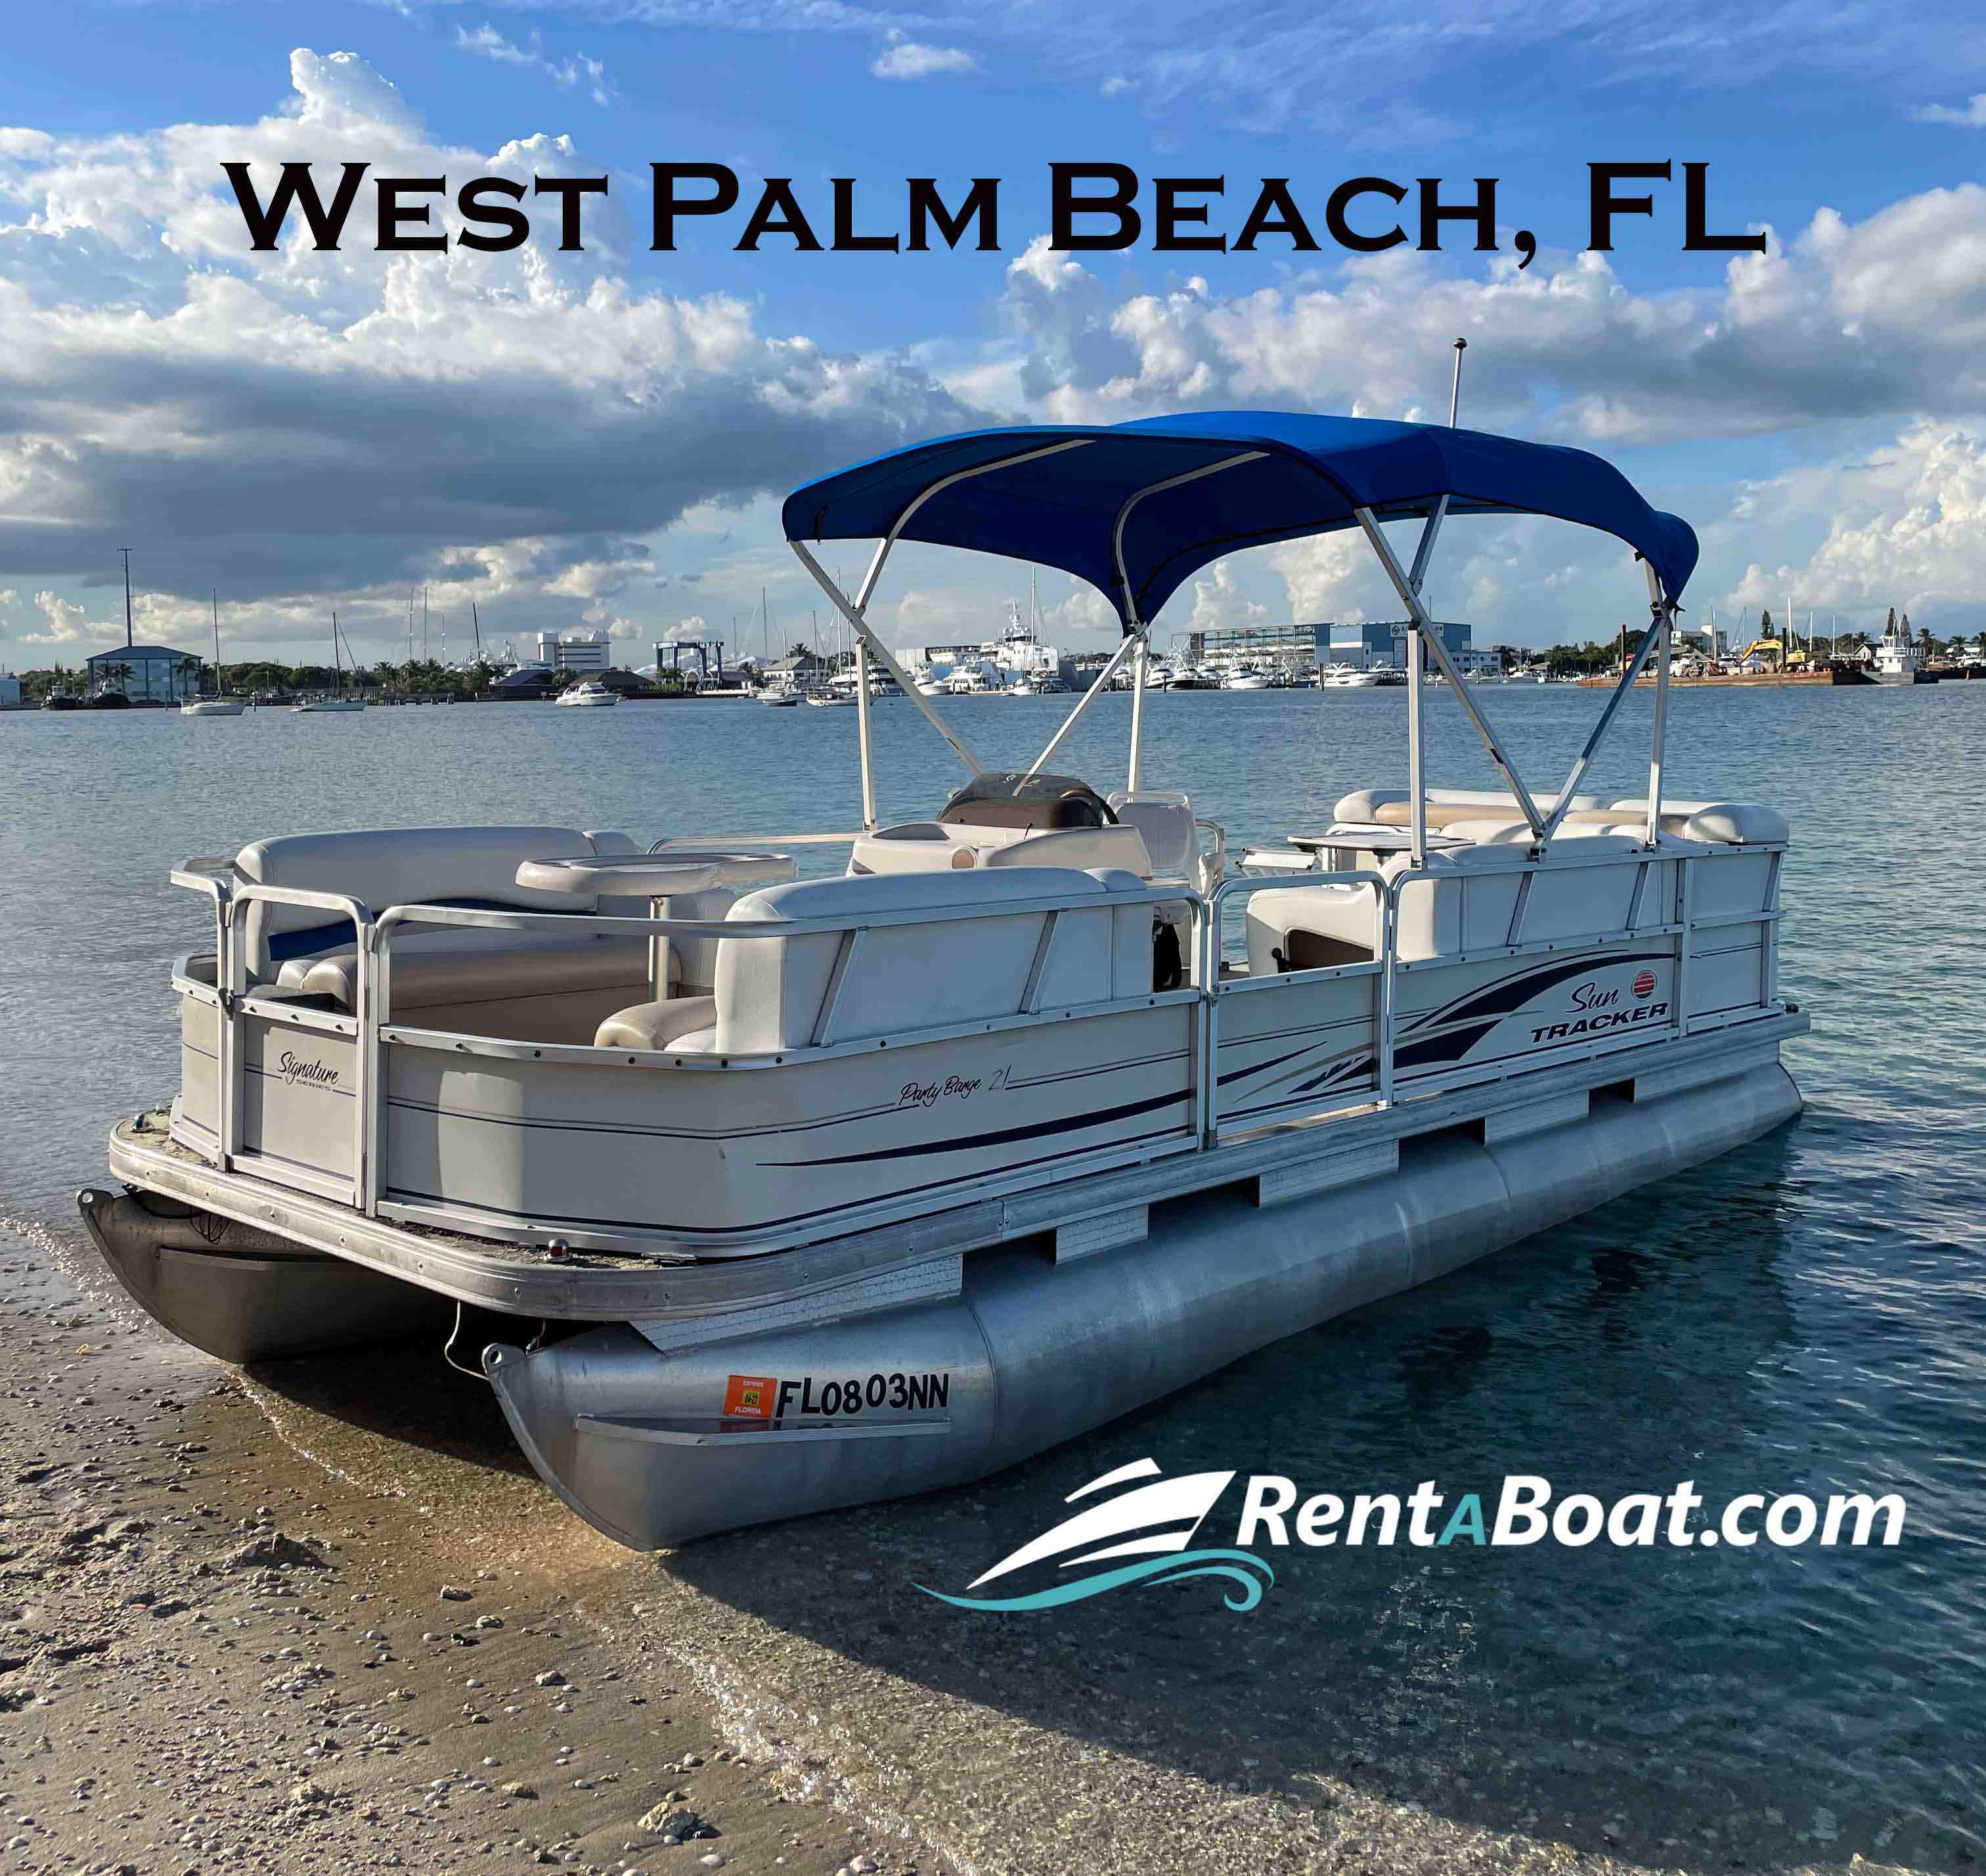  boat rentals Florida WEST PALM BEACH Florida  Sun Tracker  2006 21 